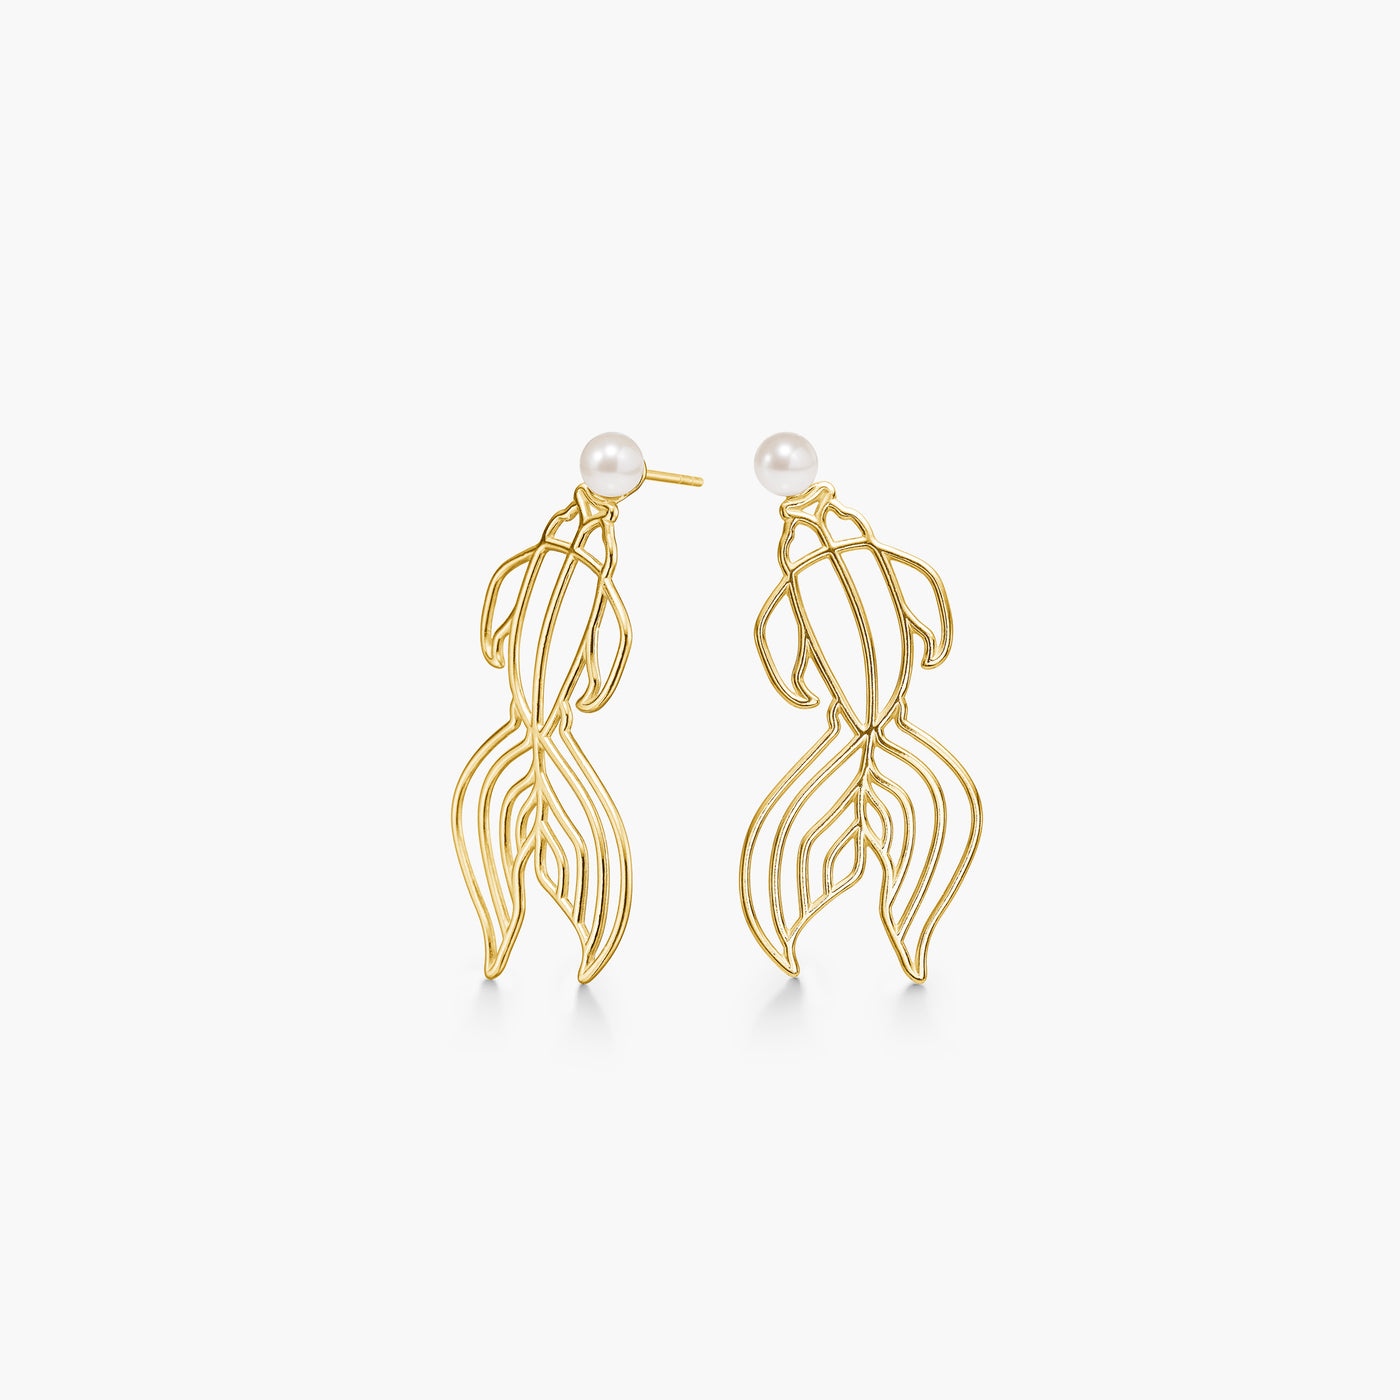 Polar jewelry koi earrings gold shop affordable fine jewelry gift for women jewellery joyful fun colourful scandinavian danish design